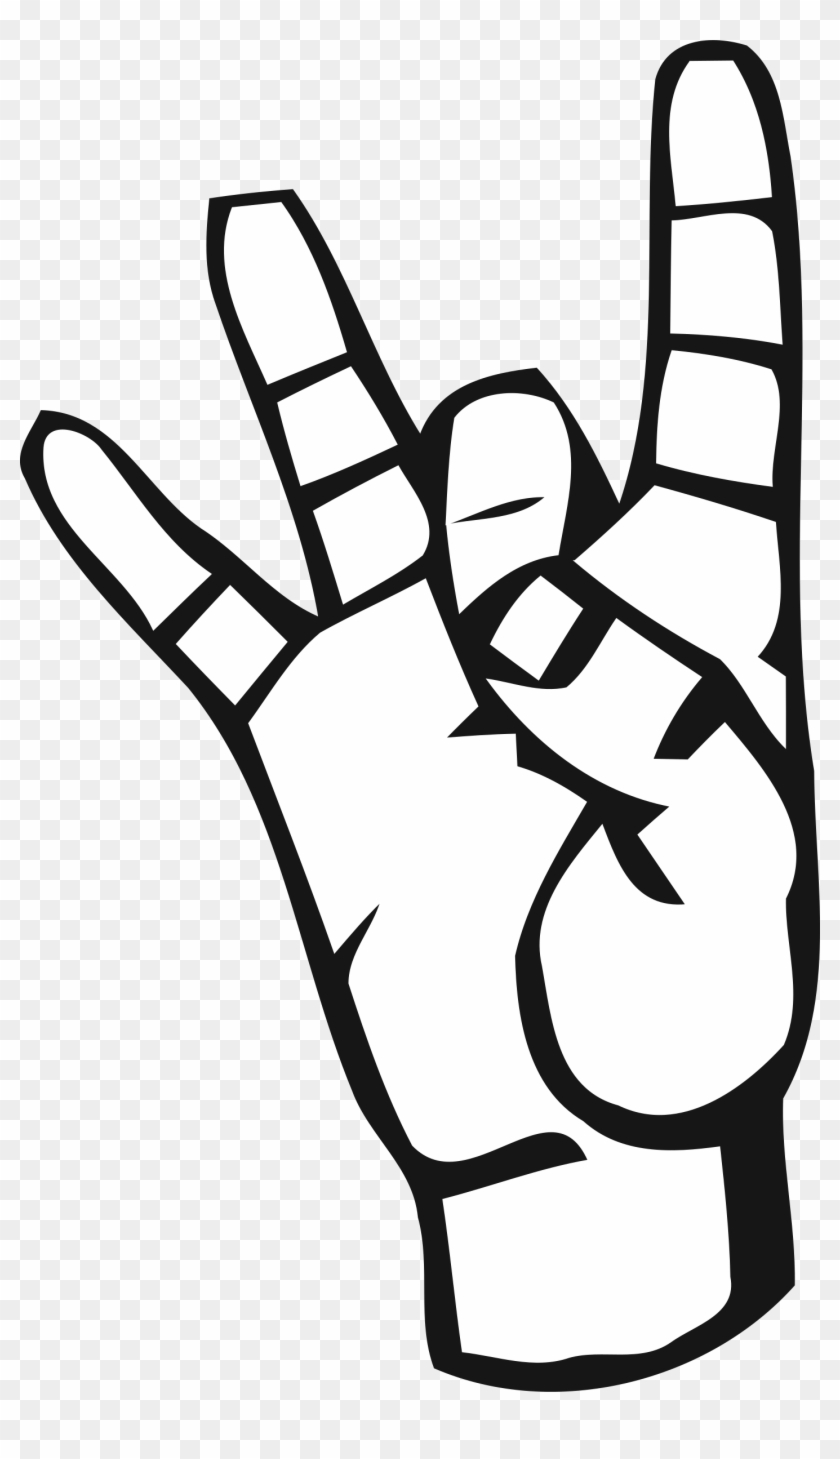 This Free Icons Png Design Of Deaf Alphabet 8 - Sign Language 5 Clip Art Transparent Png #5984430